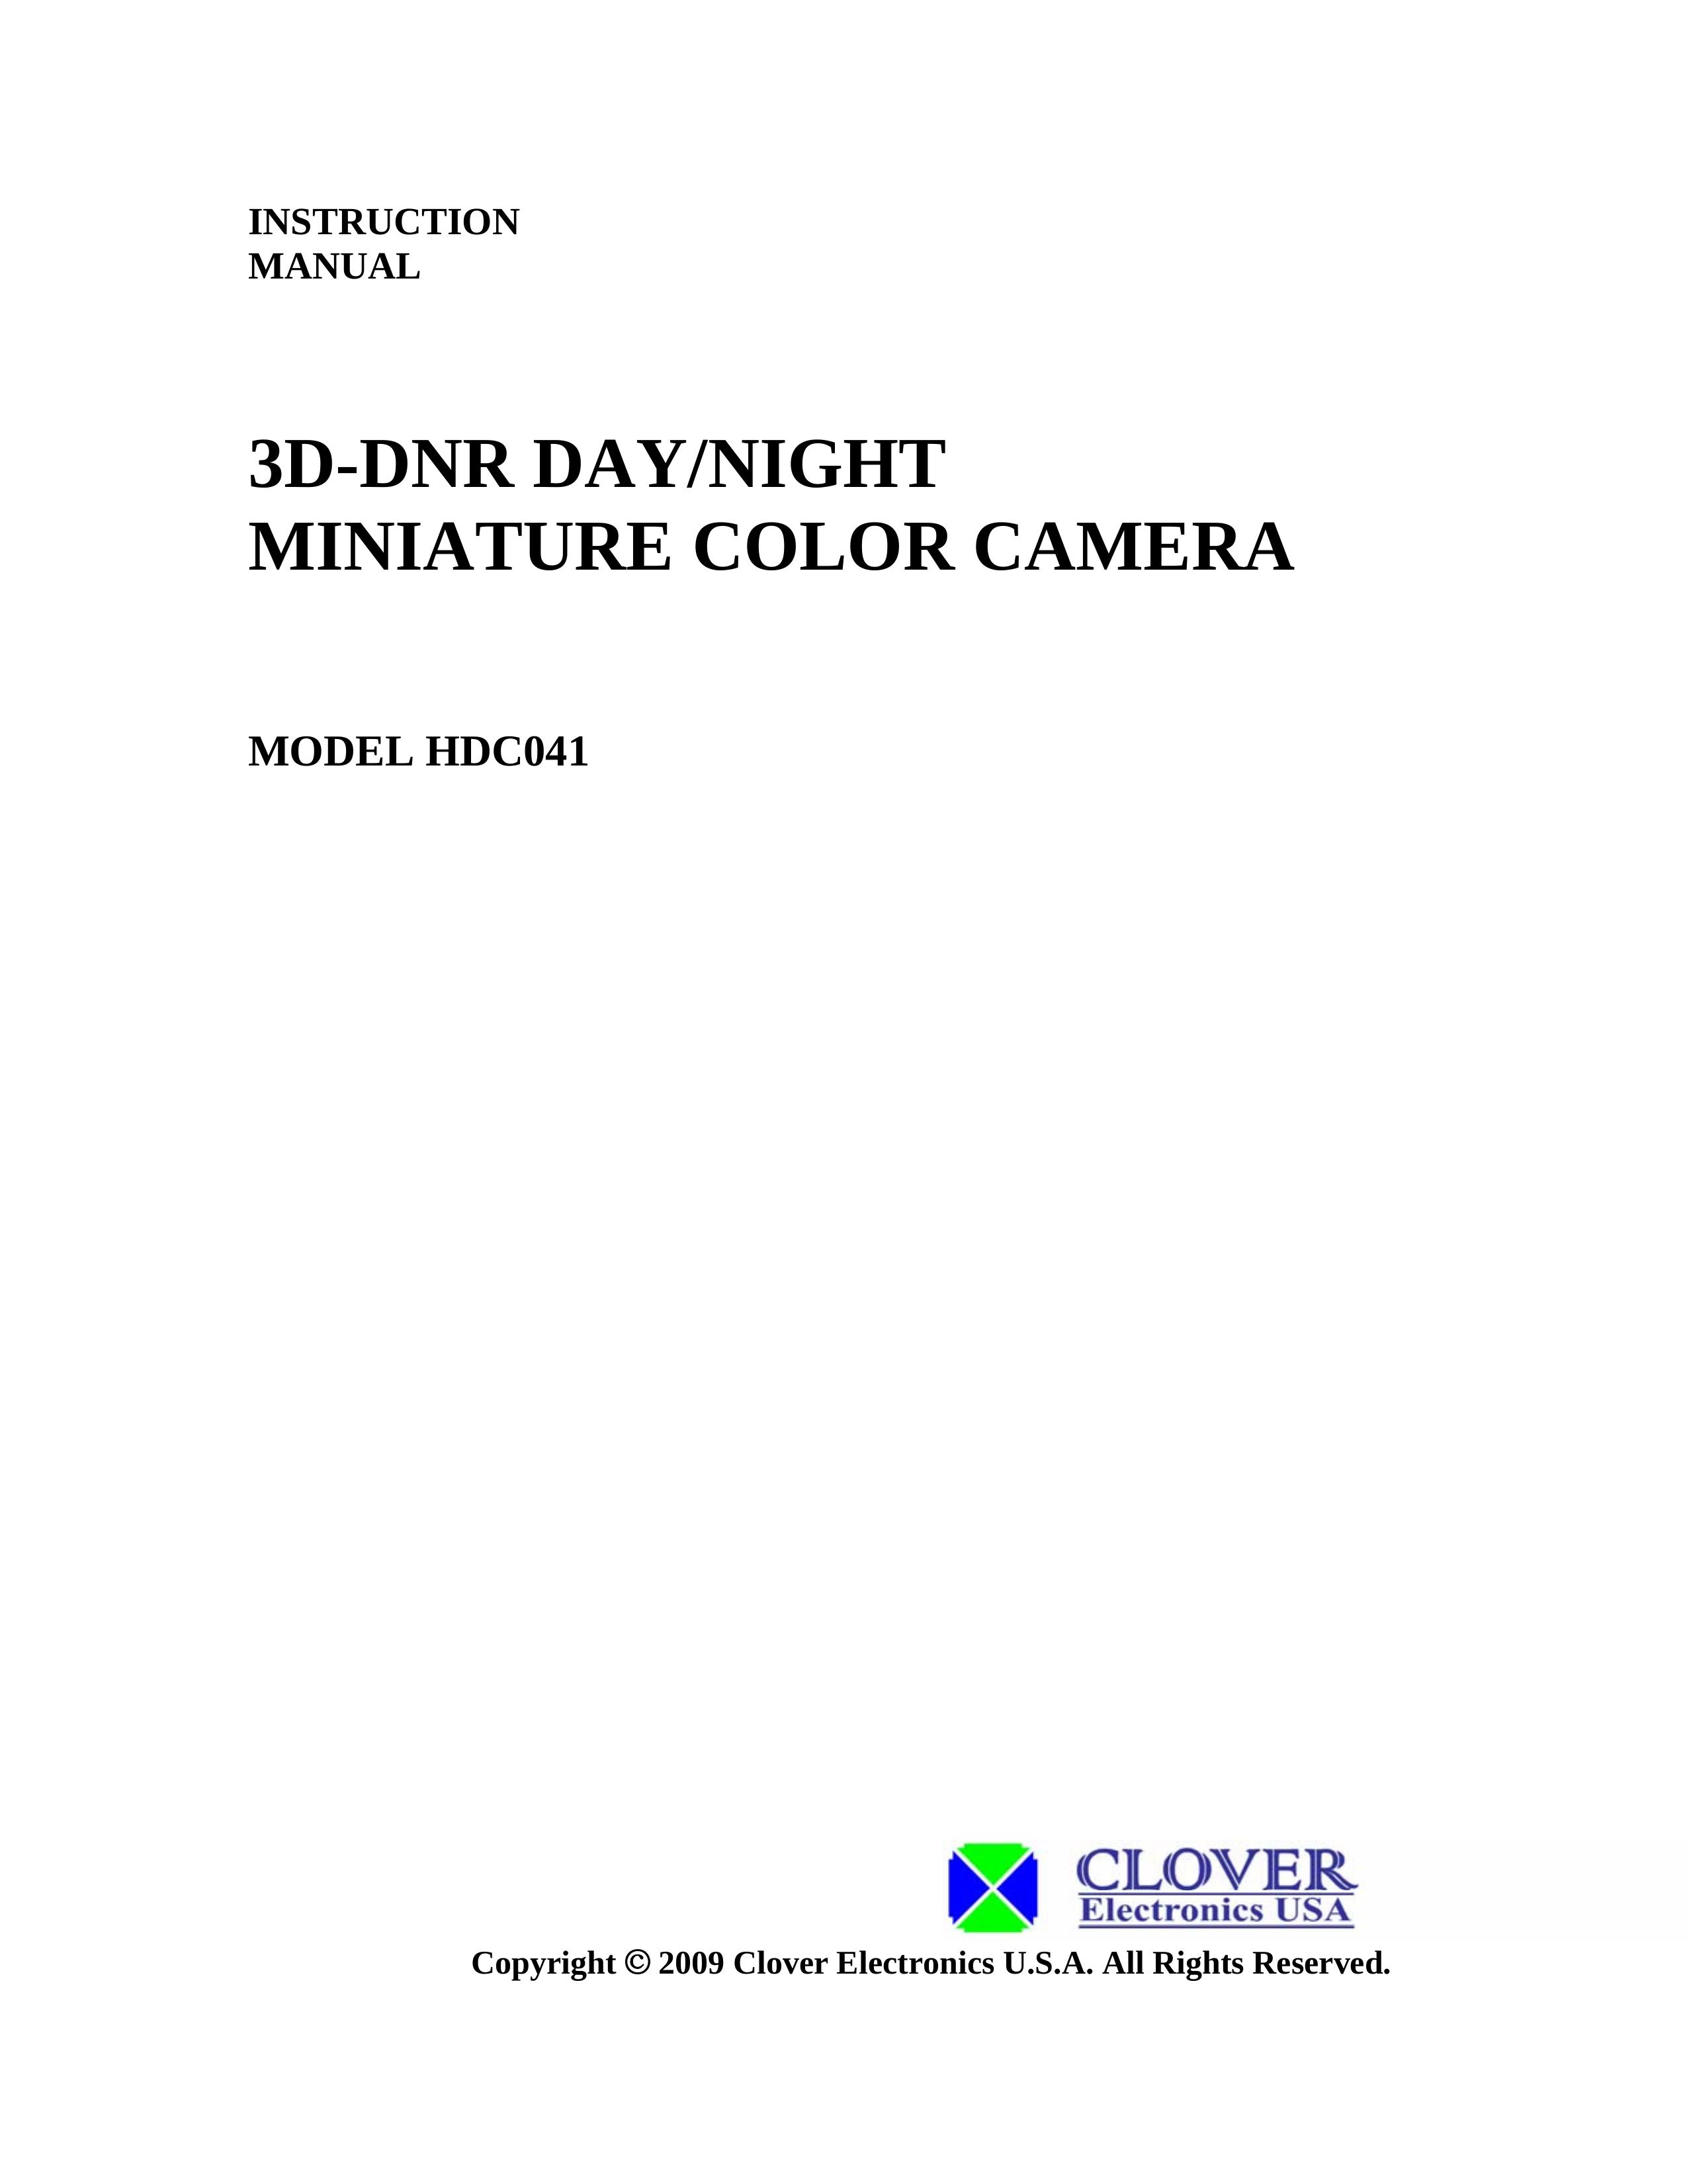 Clover Electronics HDC041 Digital Camera User Manual